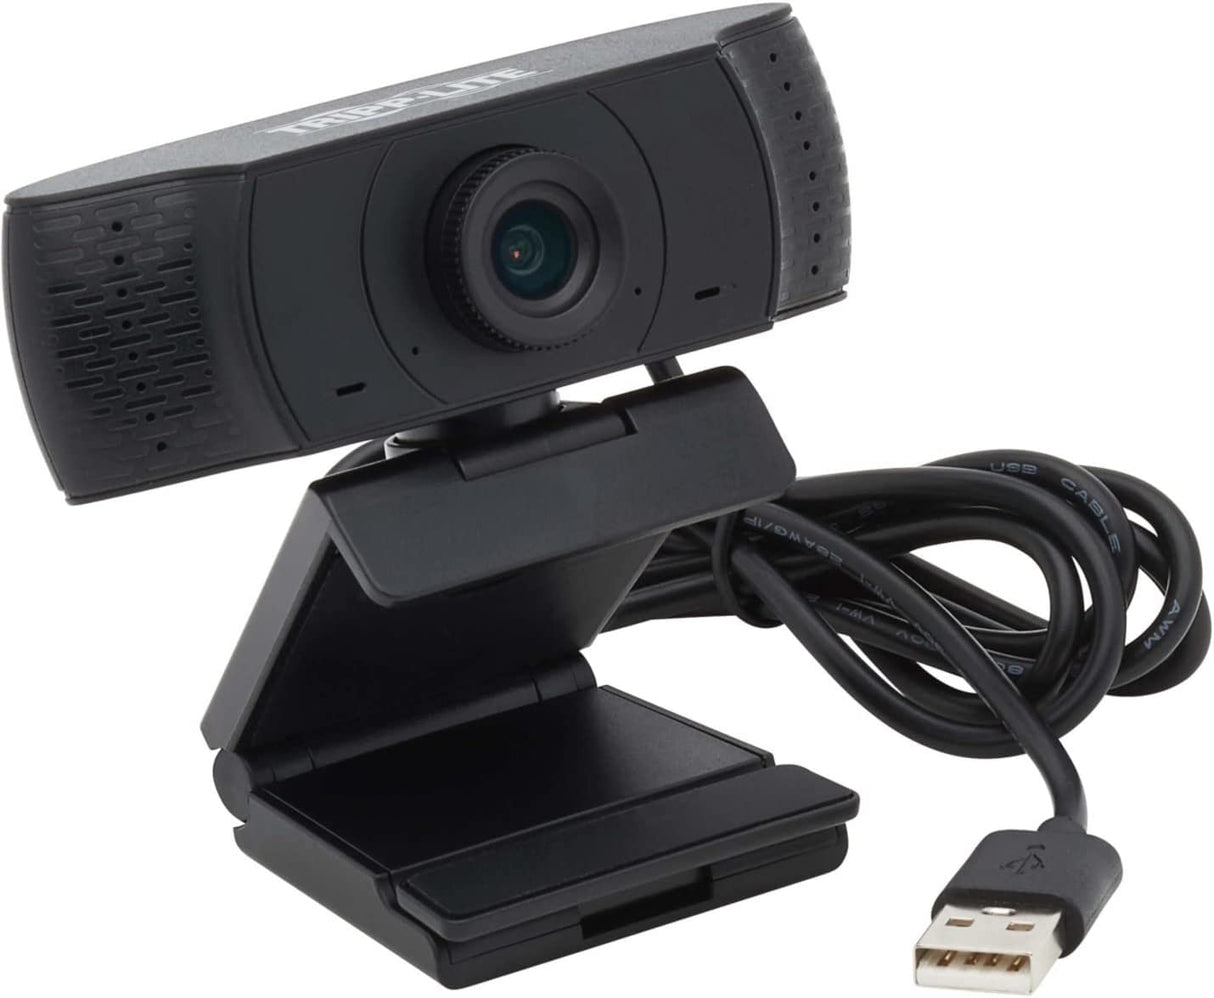 Tripp Lite USB Webcam with Microphone Web Camera for Laptops and Desktop PCs USB Camera, Computer Camera 1080p (AWC-001)